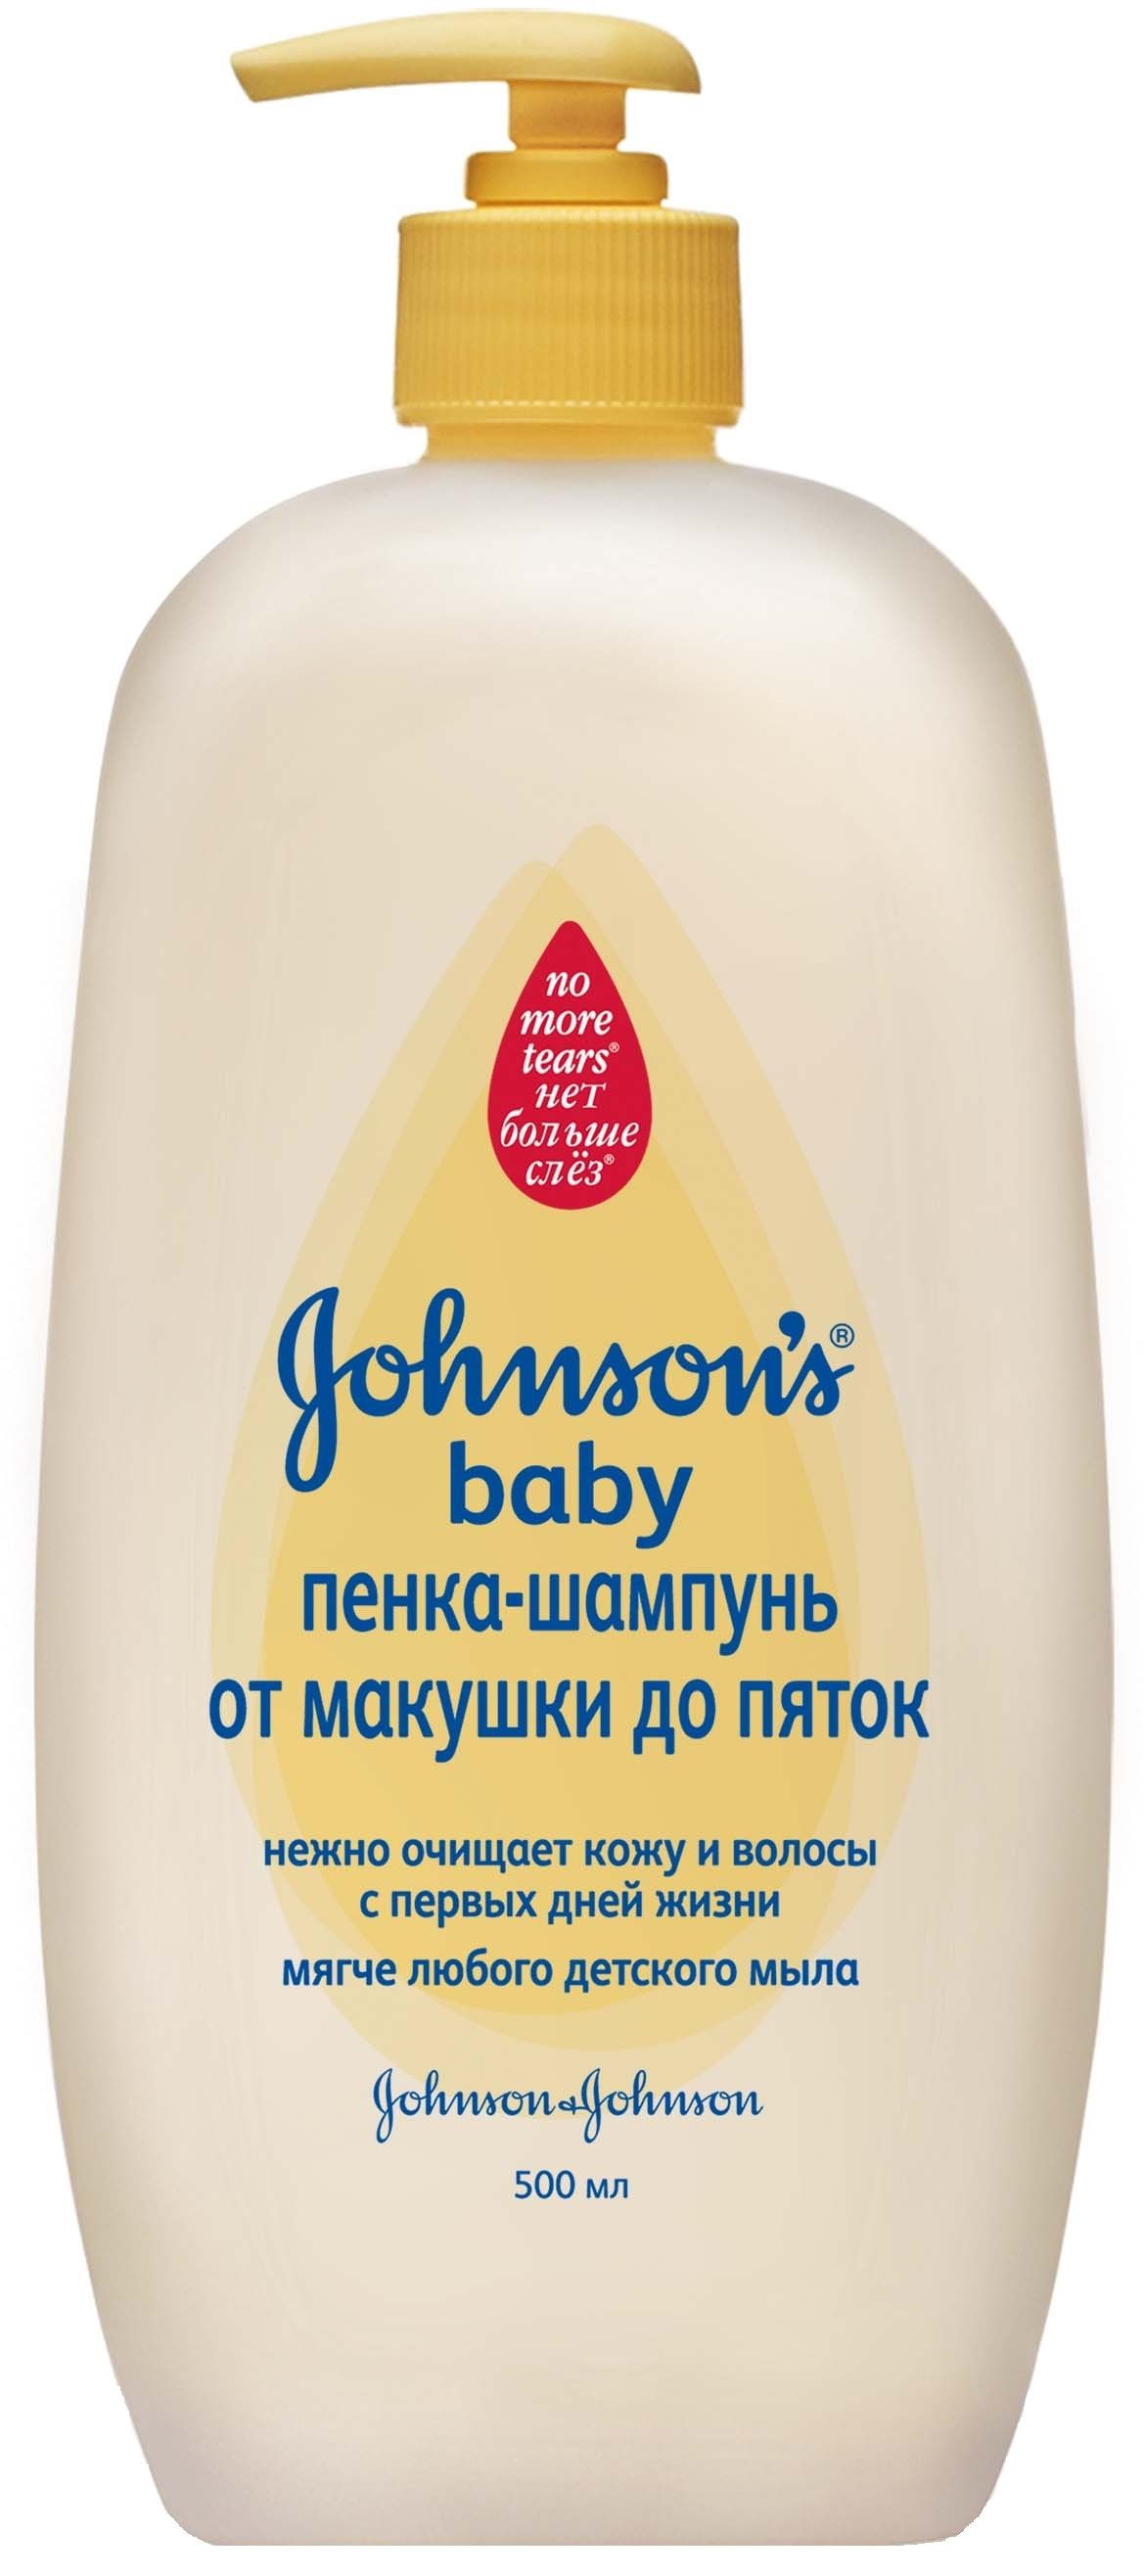 Johnson's baby Шампунь-пенка "От макушки до пяток" 500 мл + Крем под подгузник 50 мл